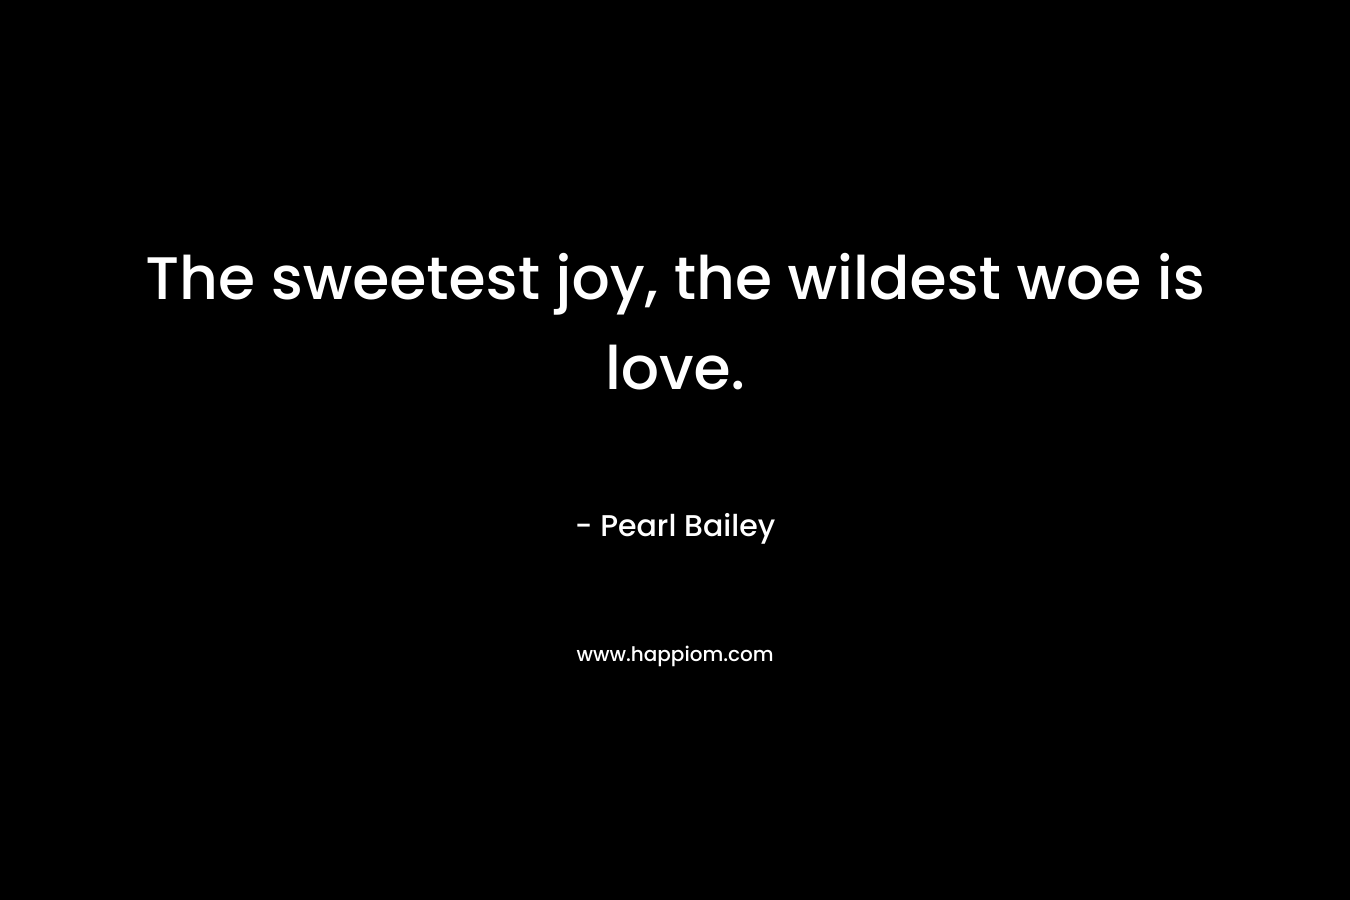 The sweetest joy, the wildest woe is love.